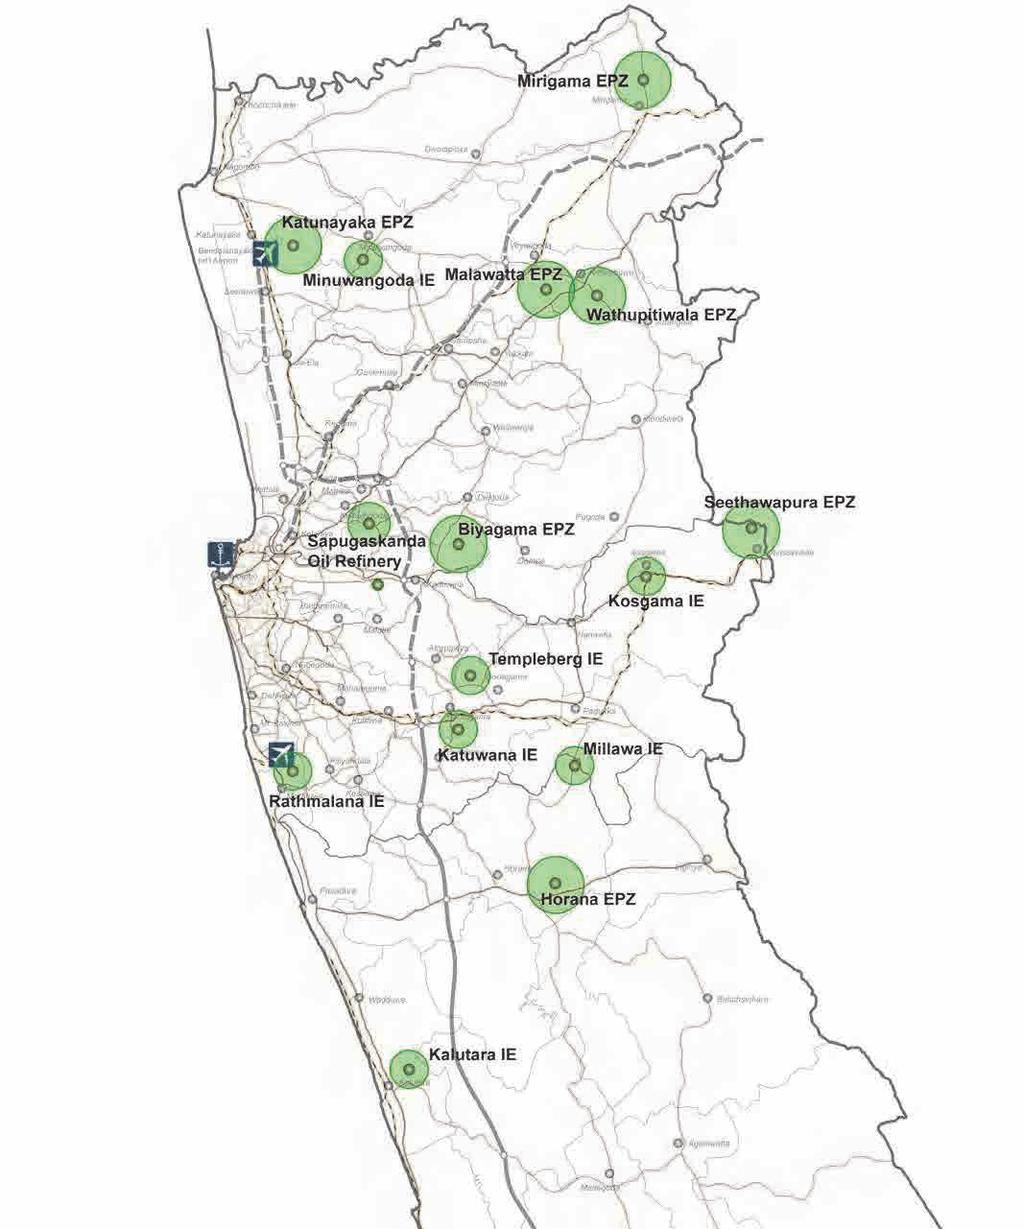 Katunayake, Minuwangoda, Mawawatta, and Mathupitiwala. On the other hand, the Kalutara District has less industrial areas.